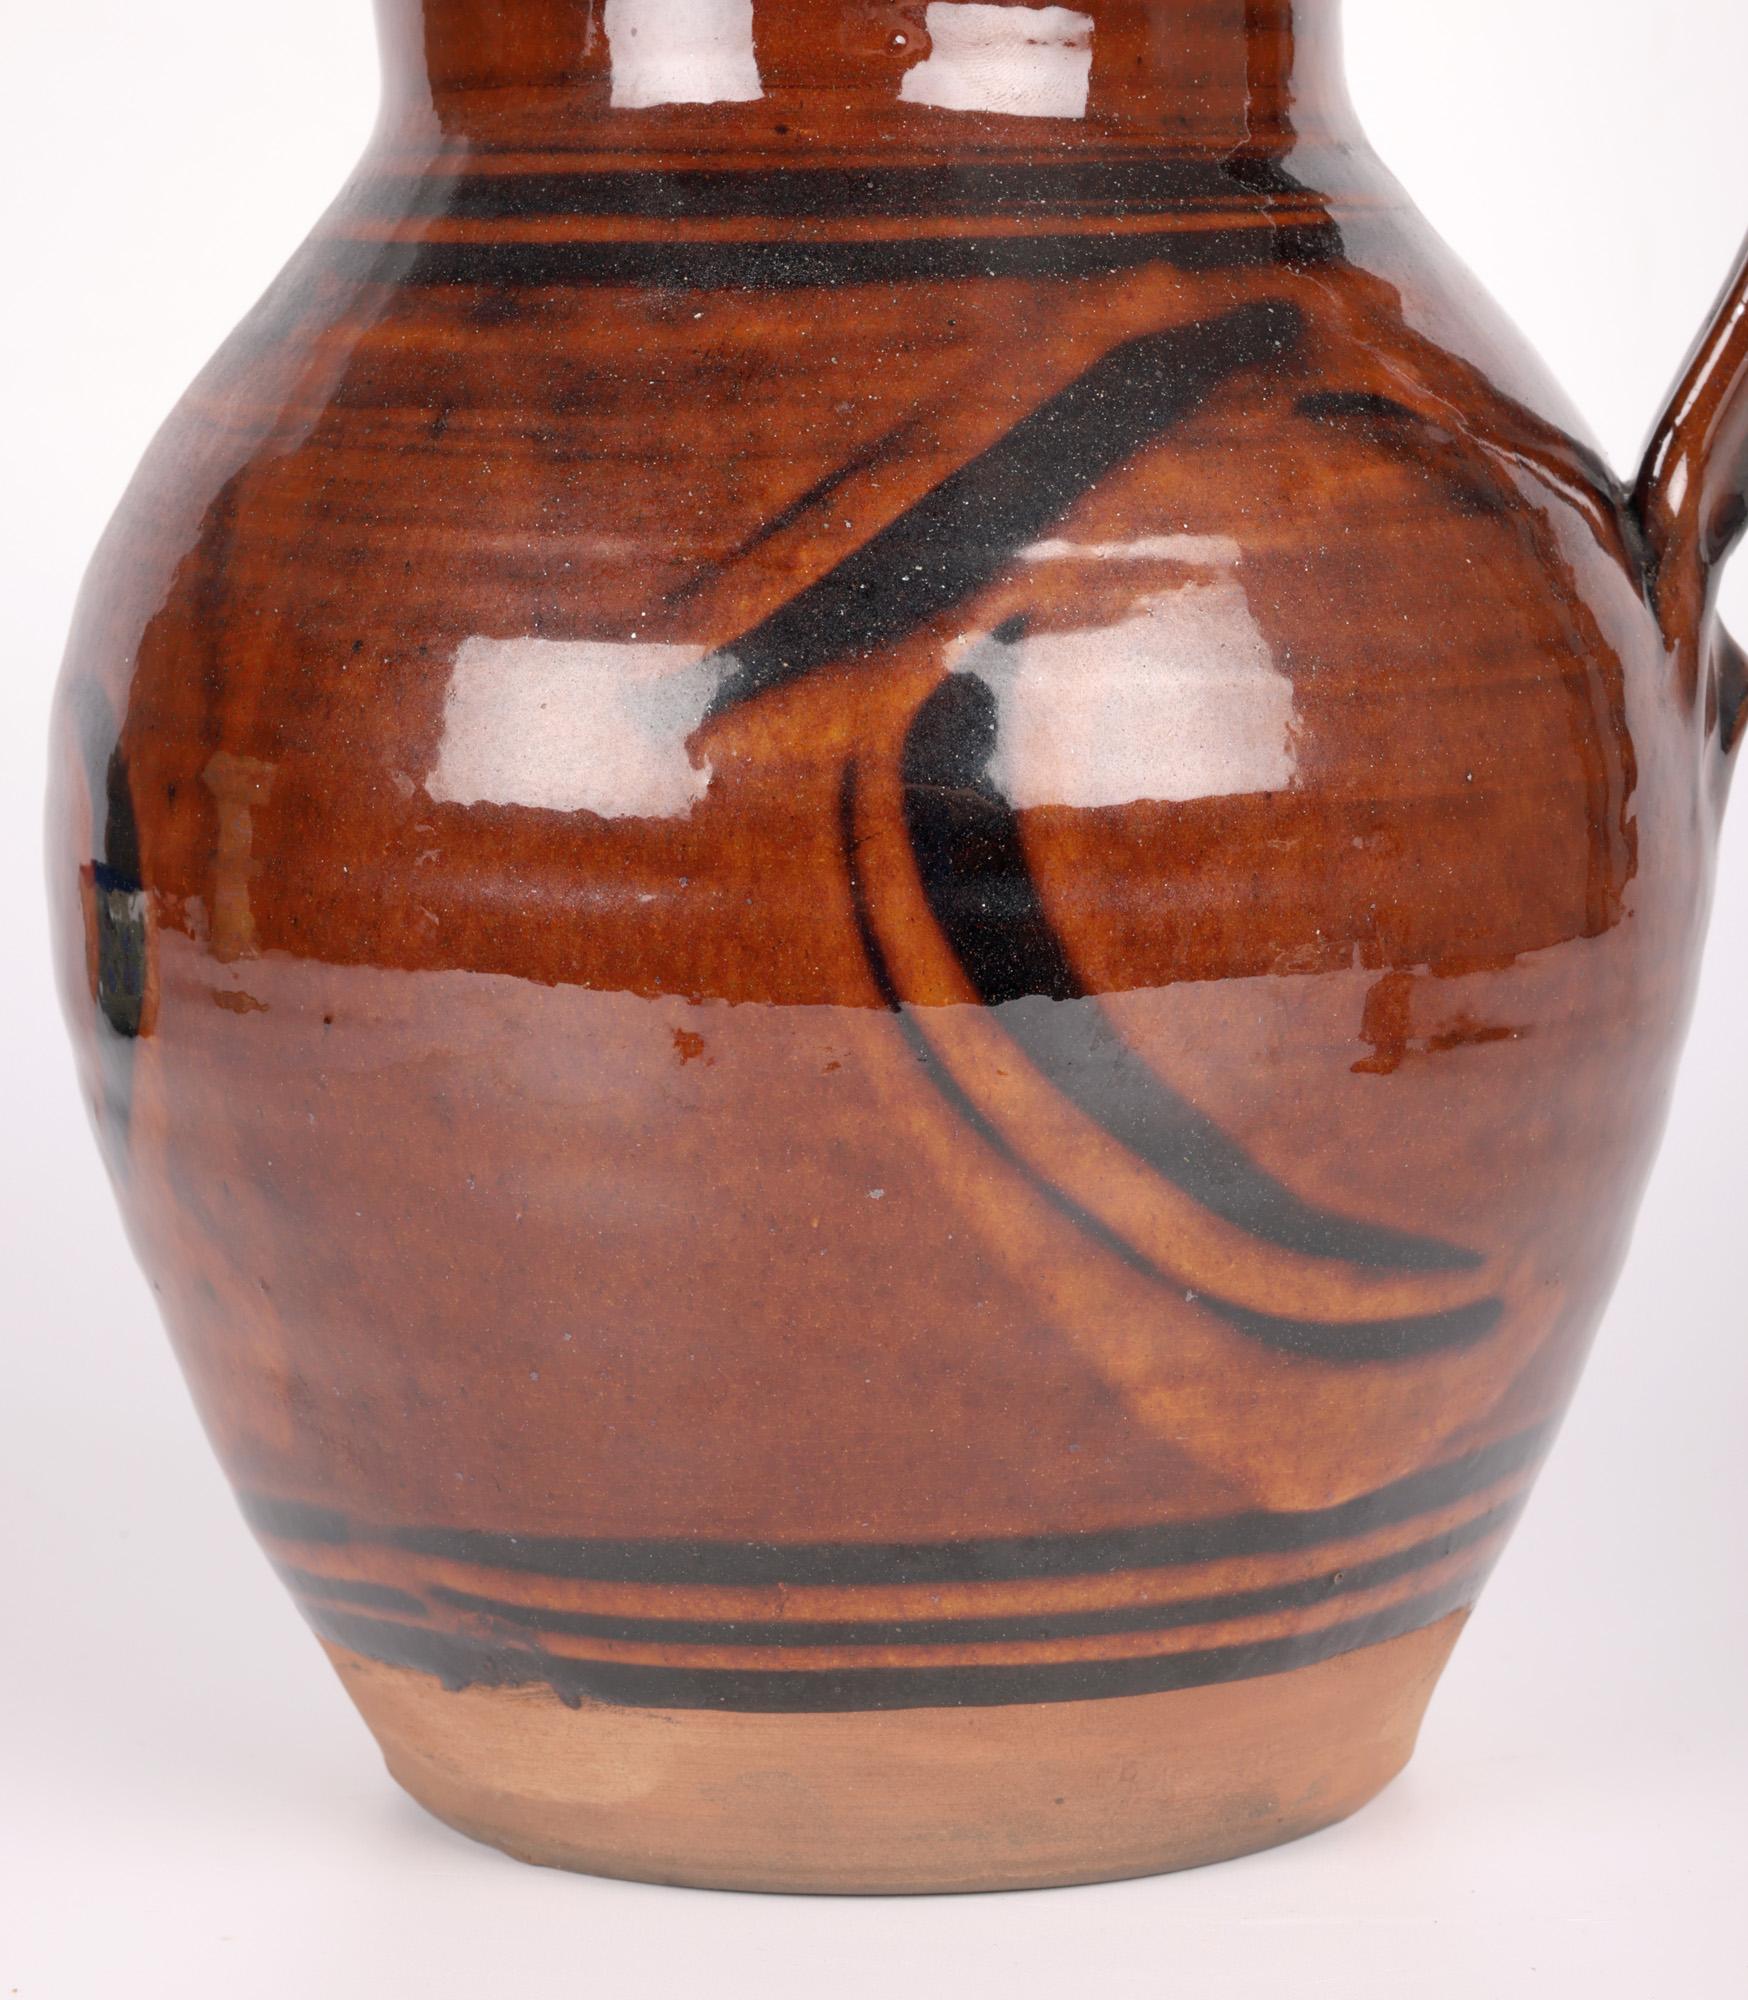 clive bowen pottery for sale